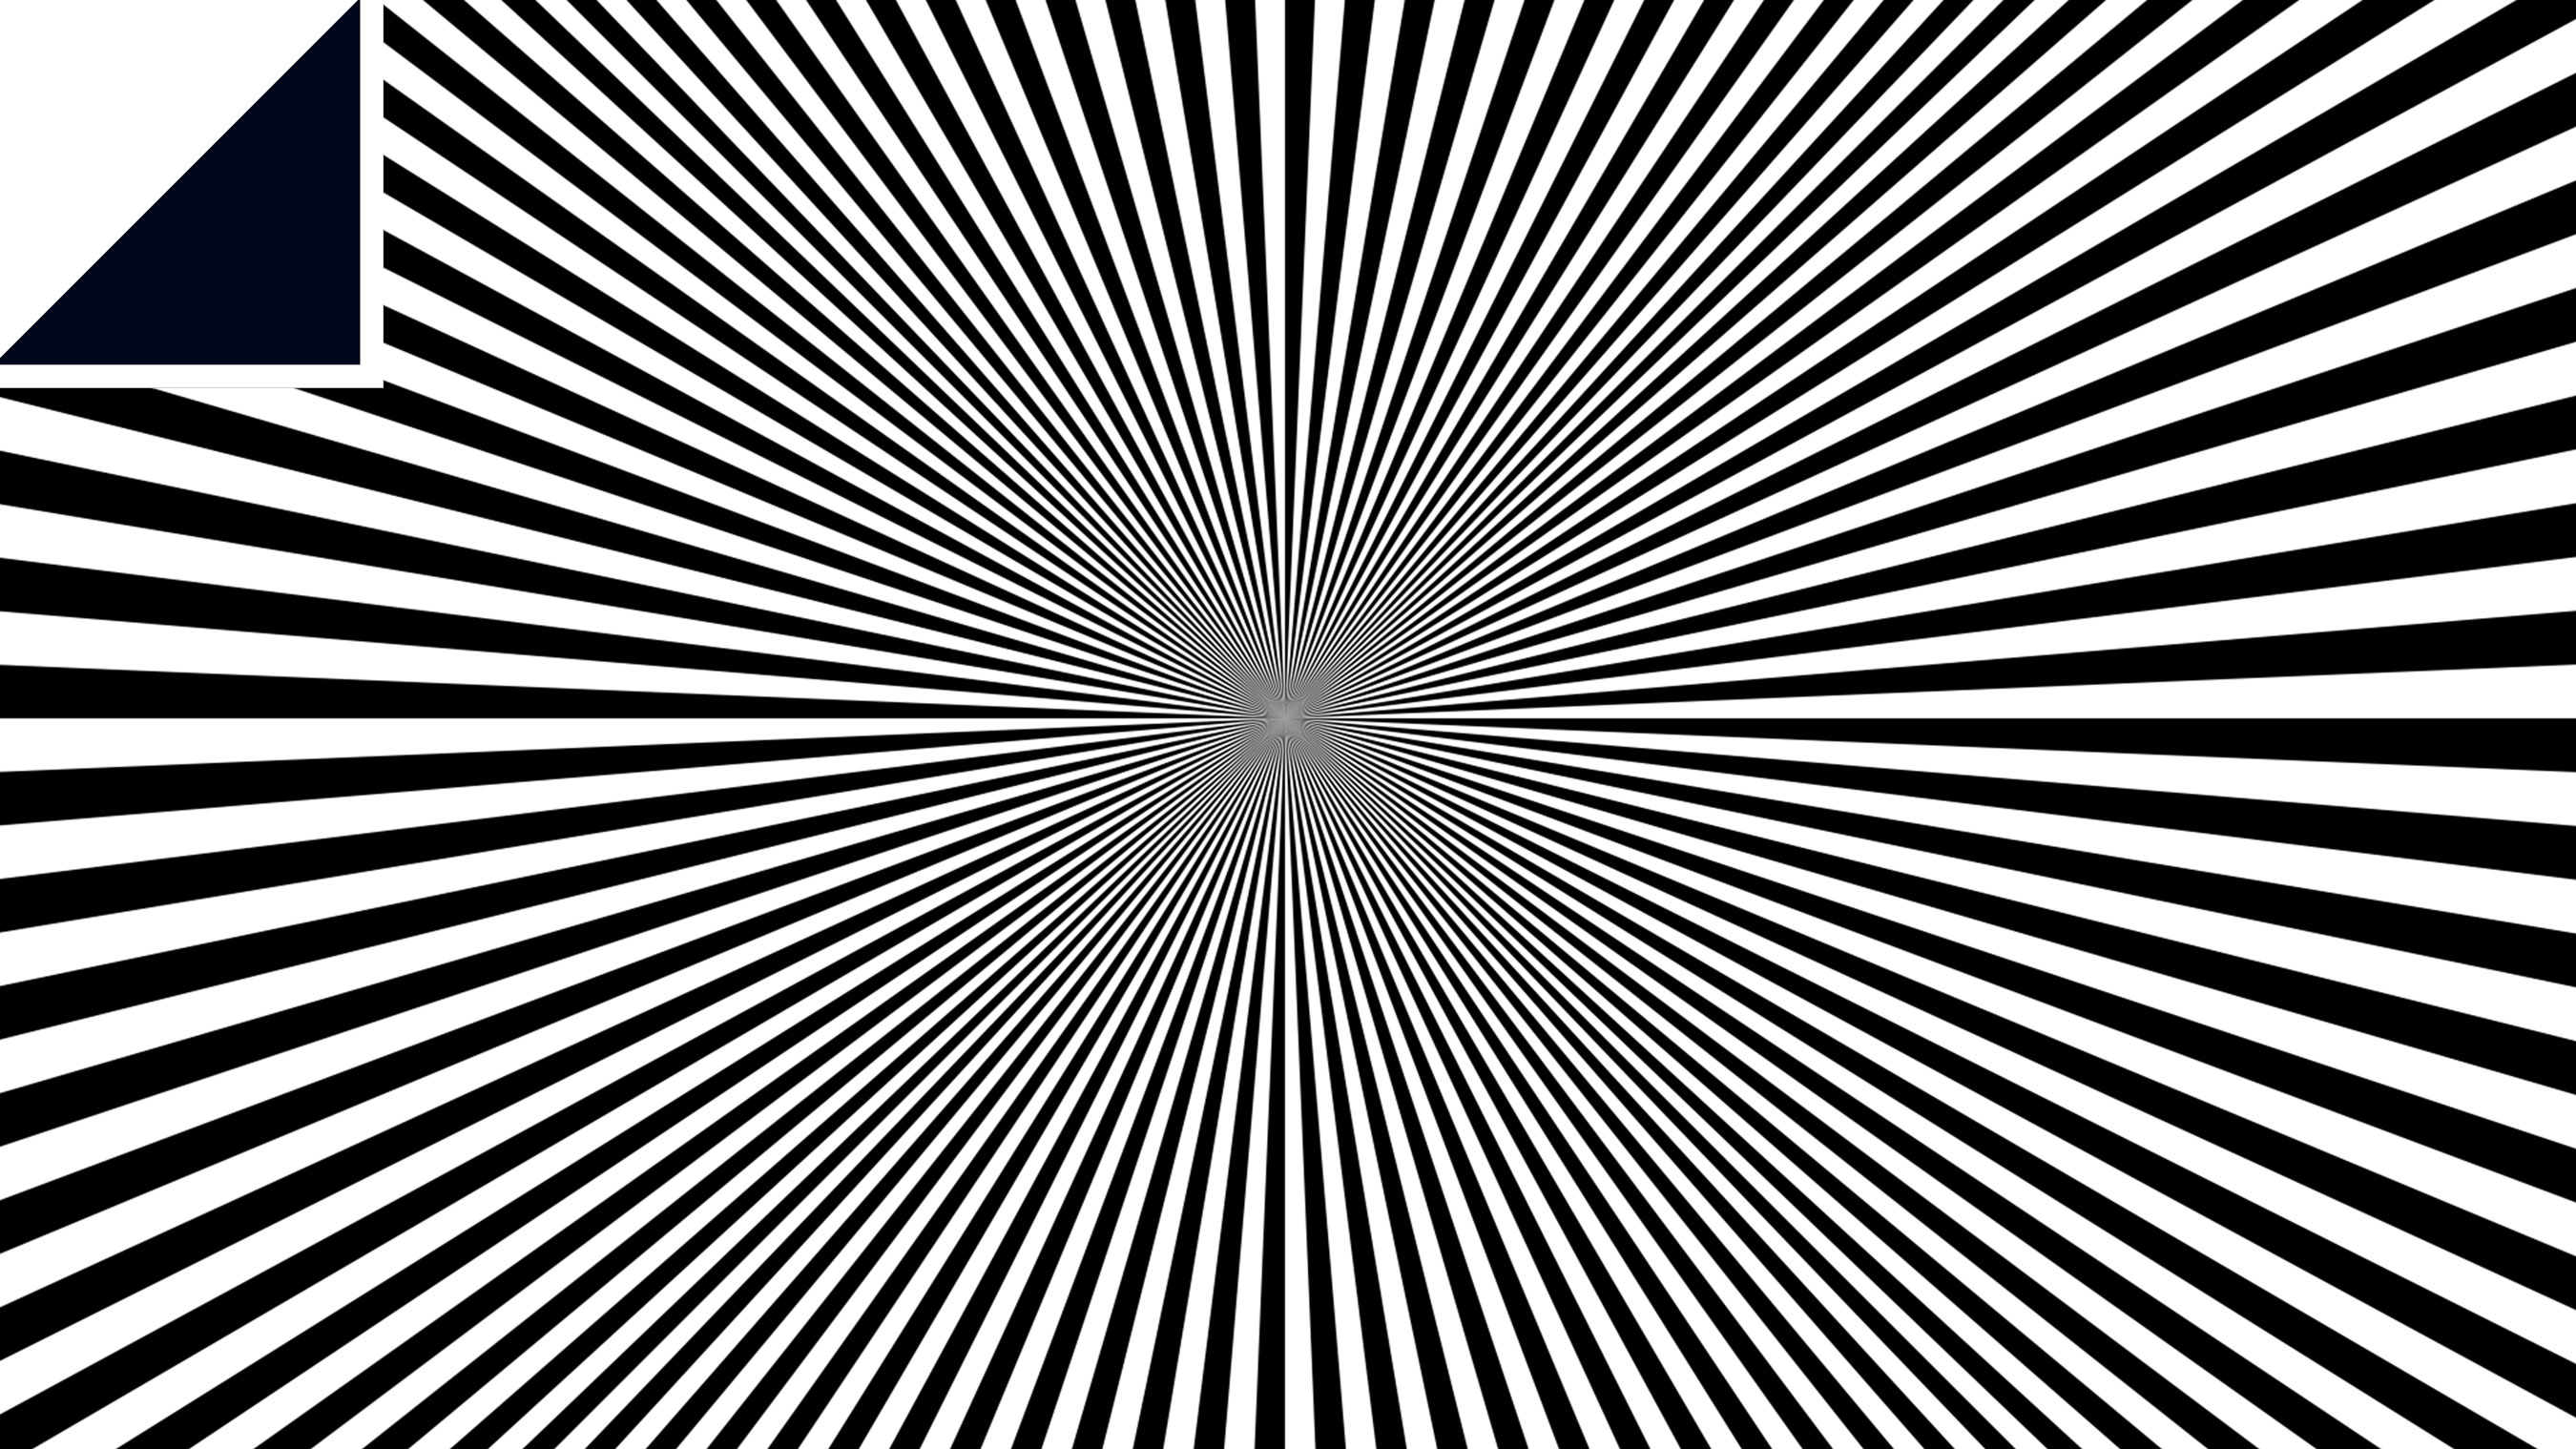 Image of black and white optical illusion